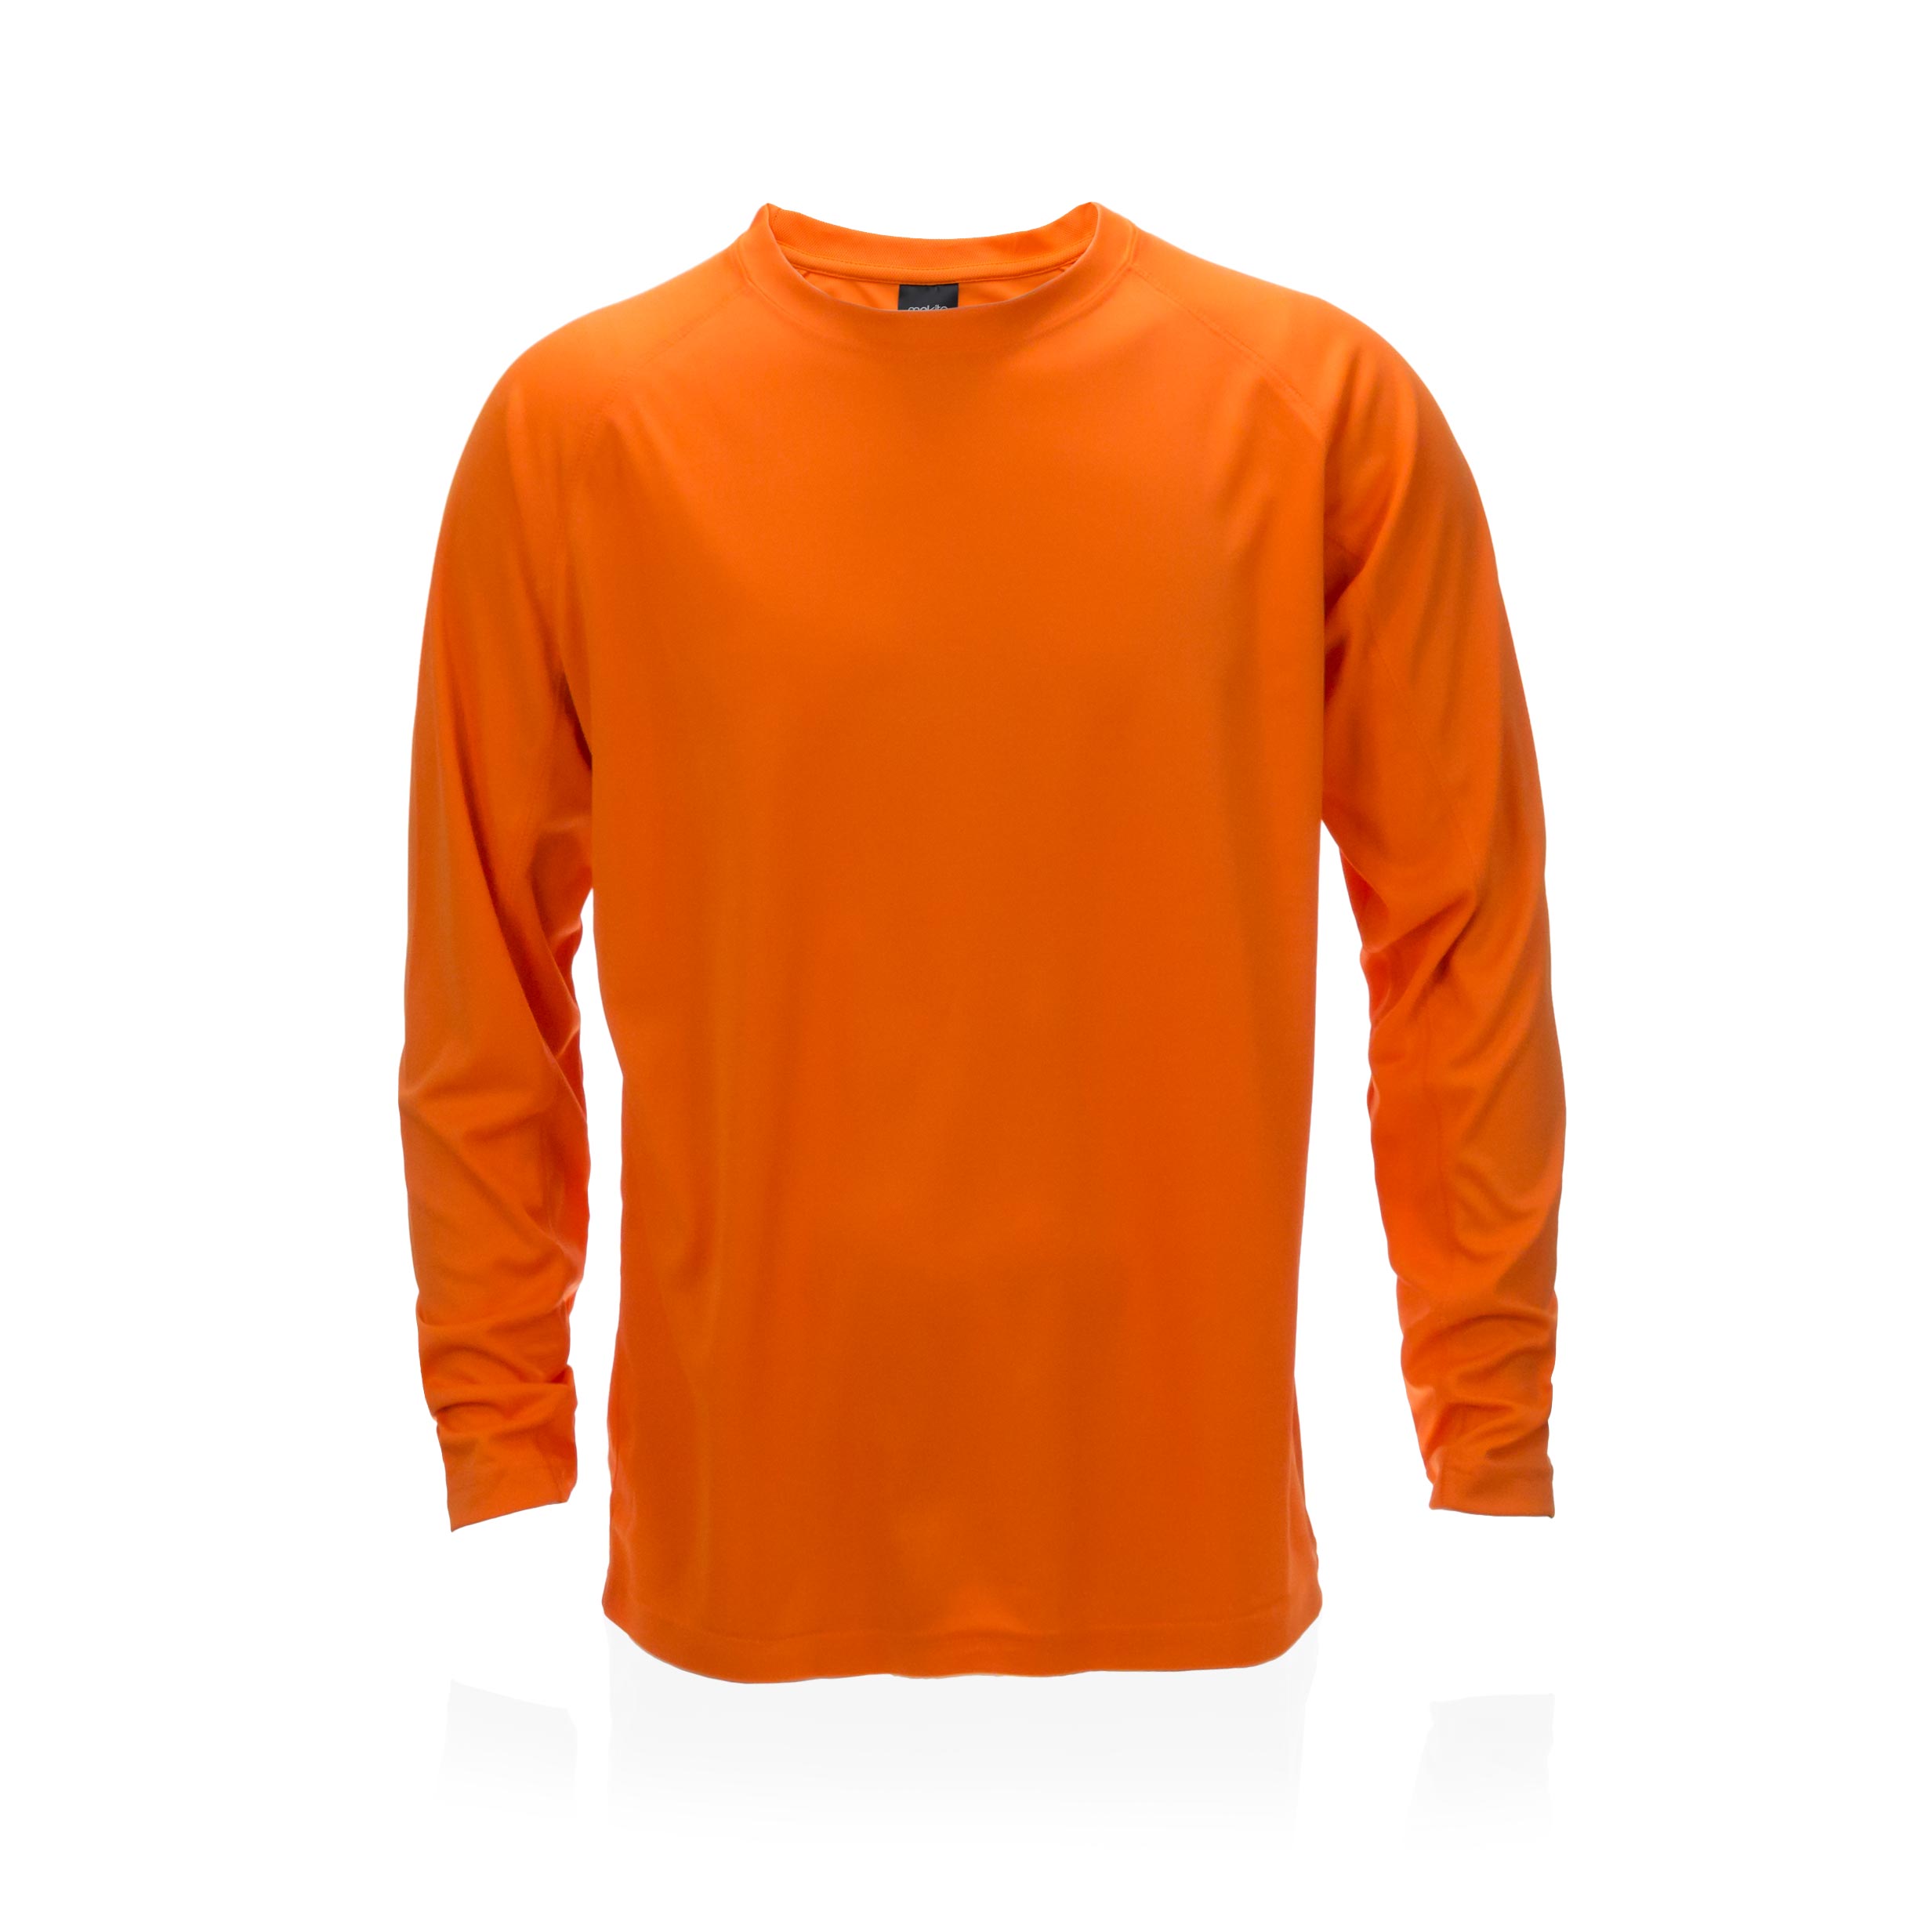 Camiseta Adulto McComb naranja talla M